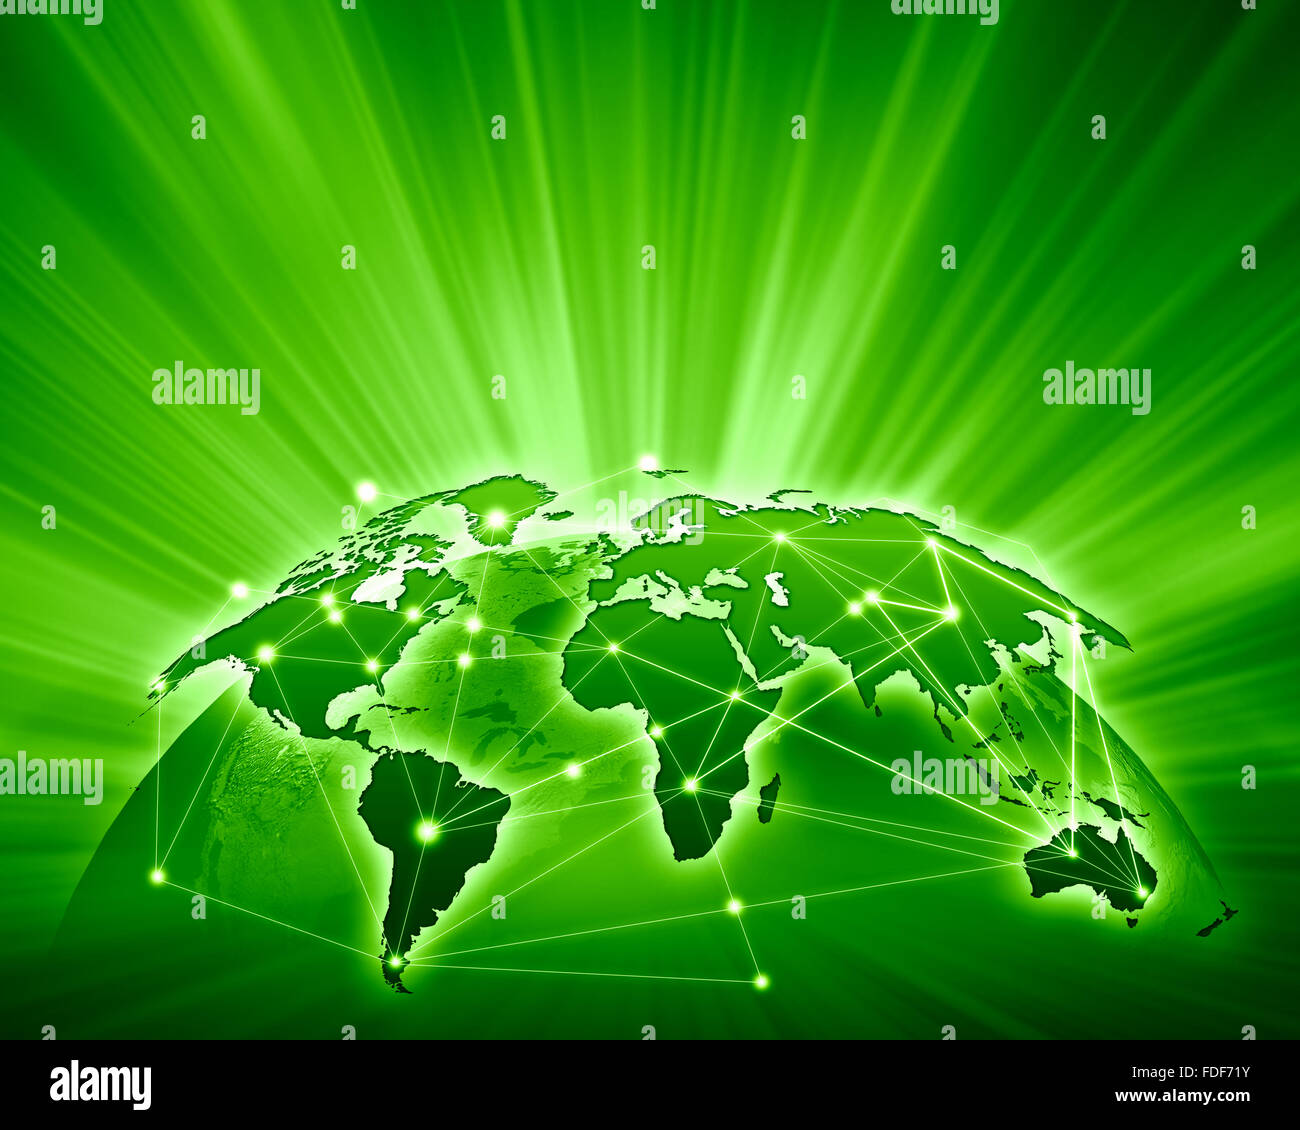 Green vivid image of globe. Globalization concept Stock Photo